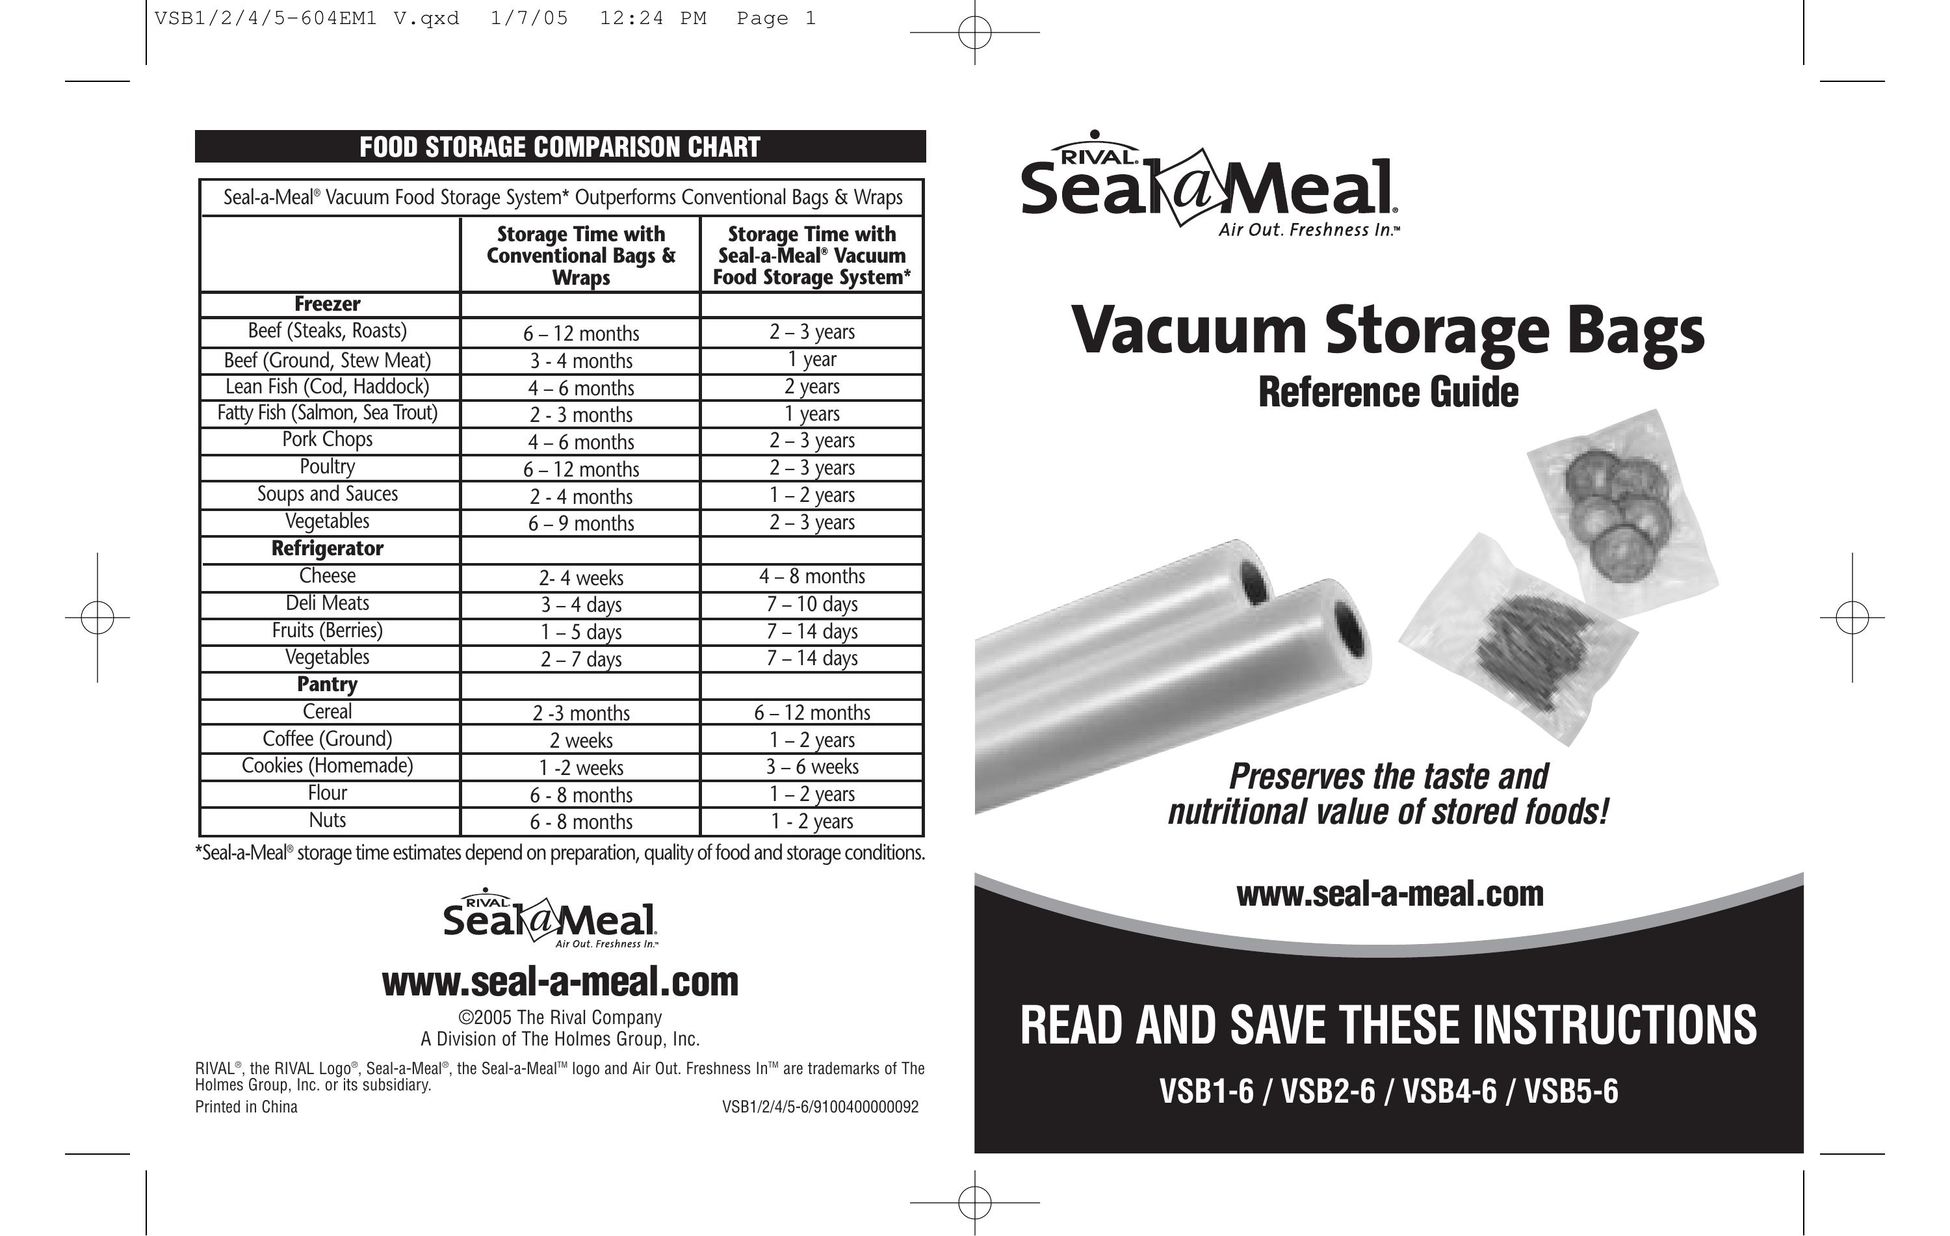 Seal-a-Meal VSB4-6 Food Saver User Manual